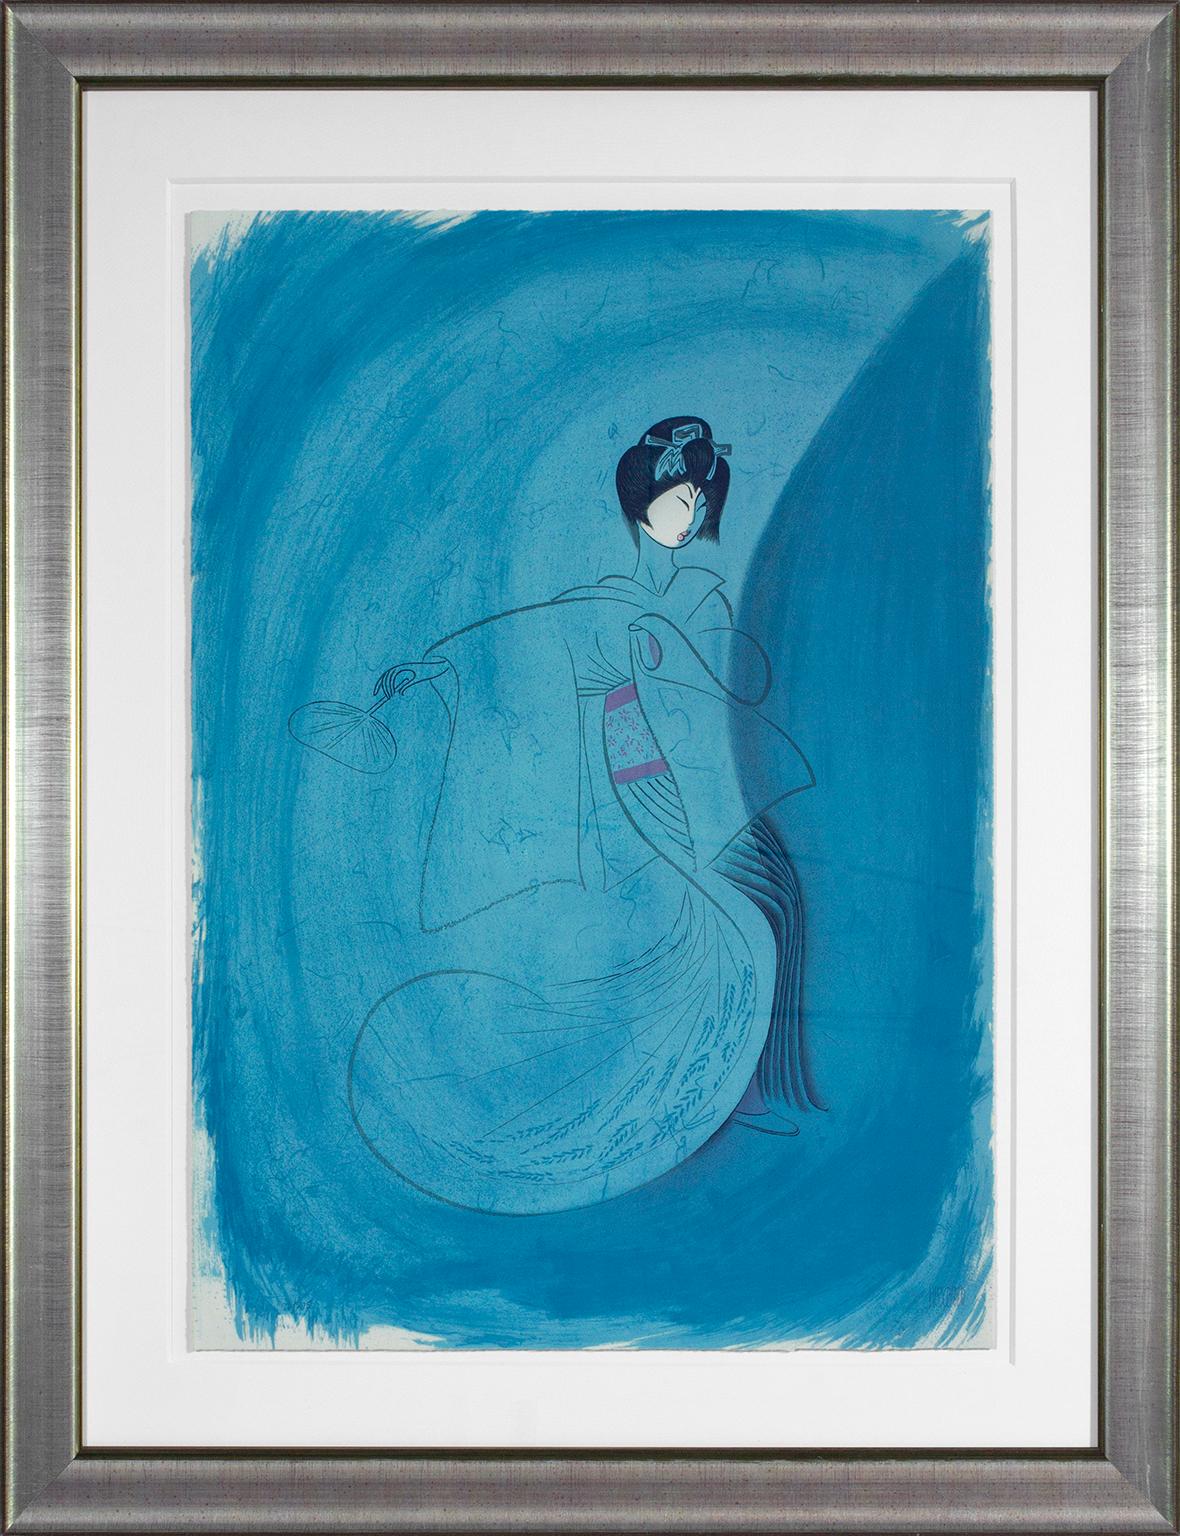 Albert Al Hirschfeld Figurative Print - "Kyo" framed, hand-signed lithograph from 1976 "Kabuki Suite" by Al Hirschfeld